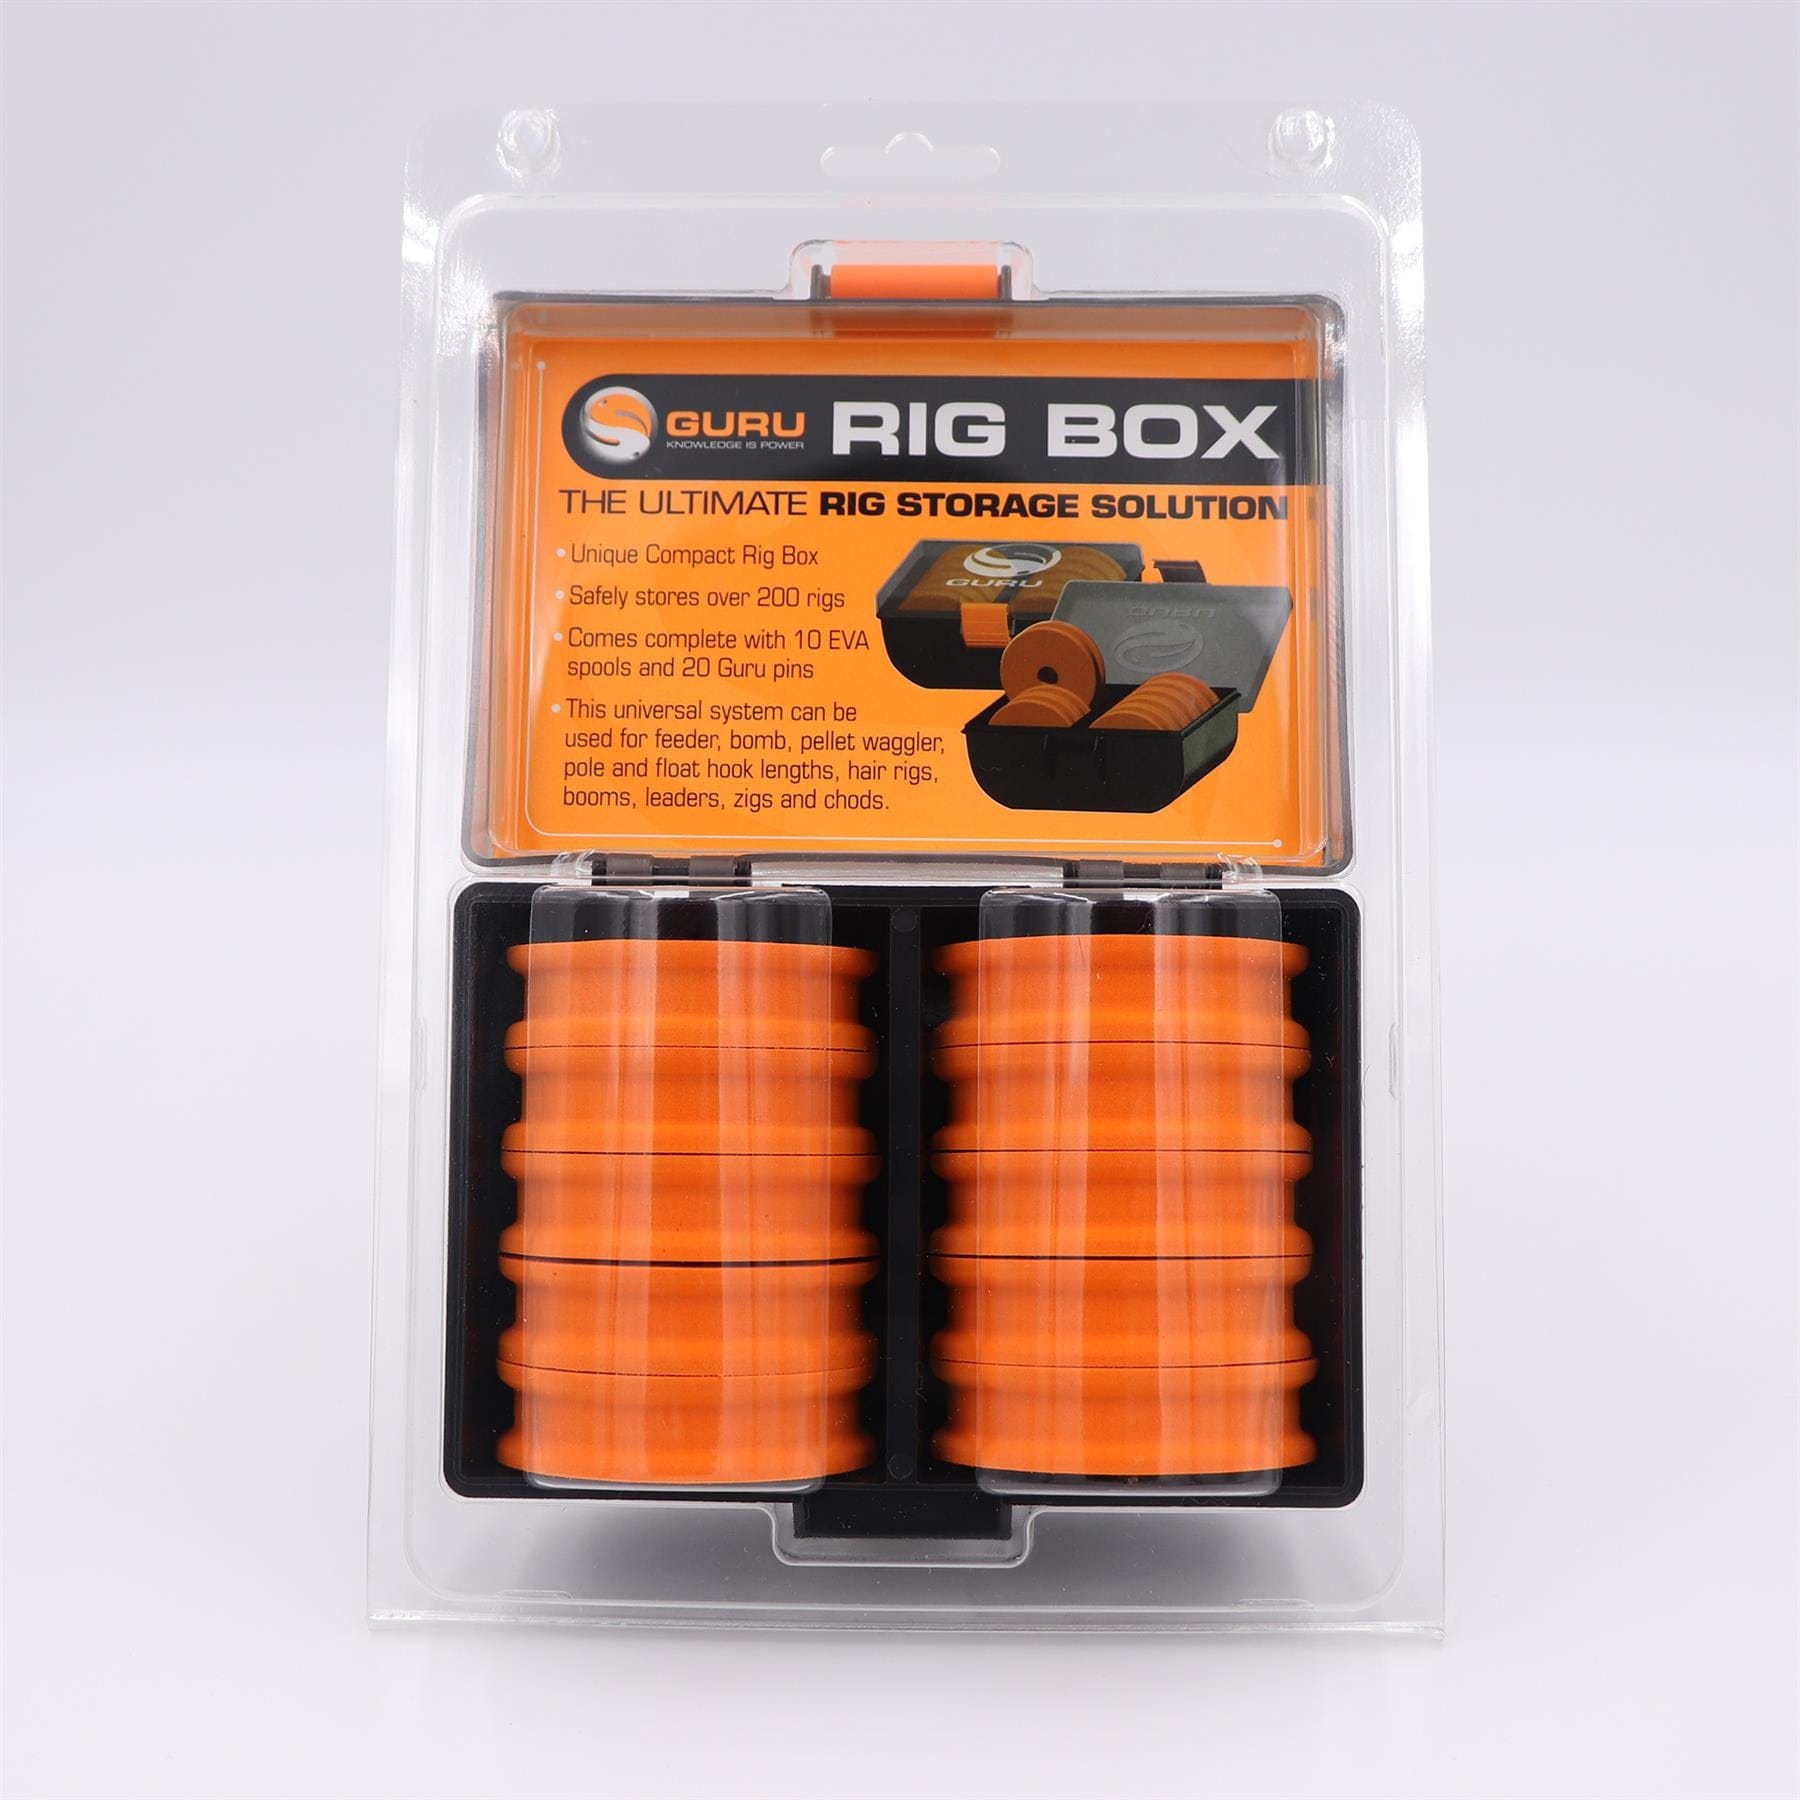 Guru Rig Box with 10 EVA spools (Store 200 rigs).